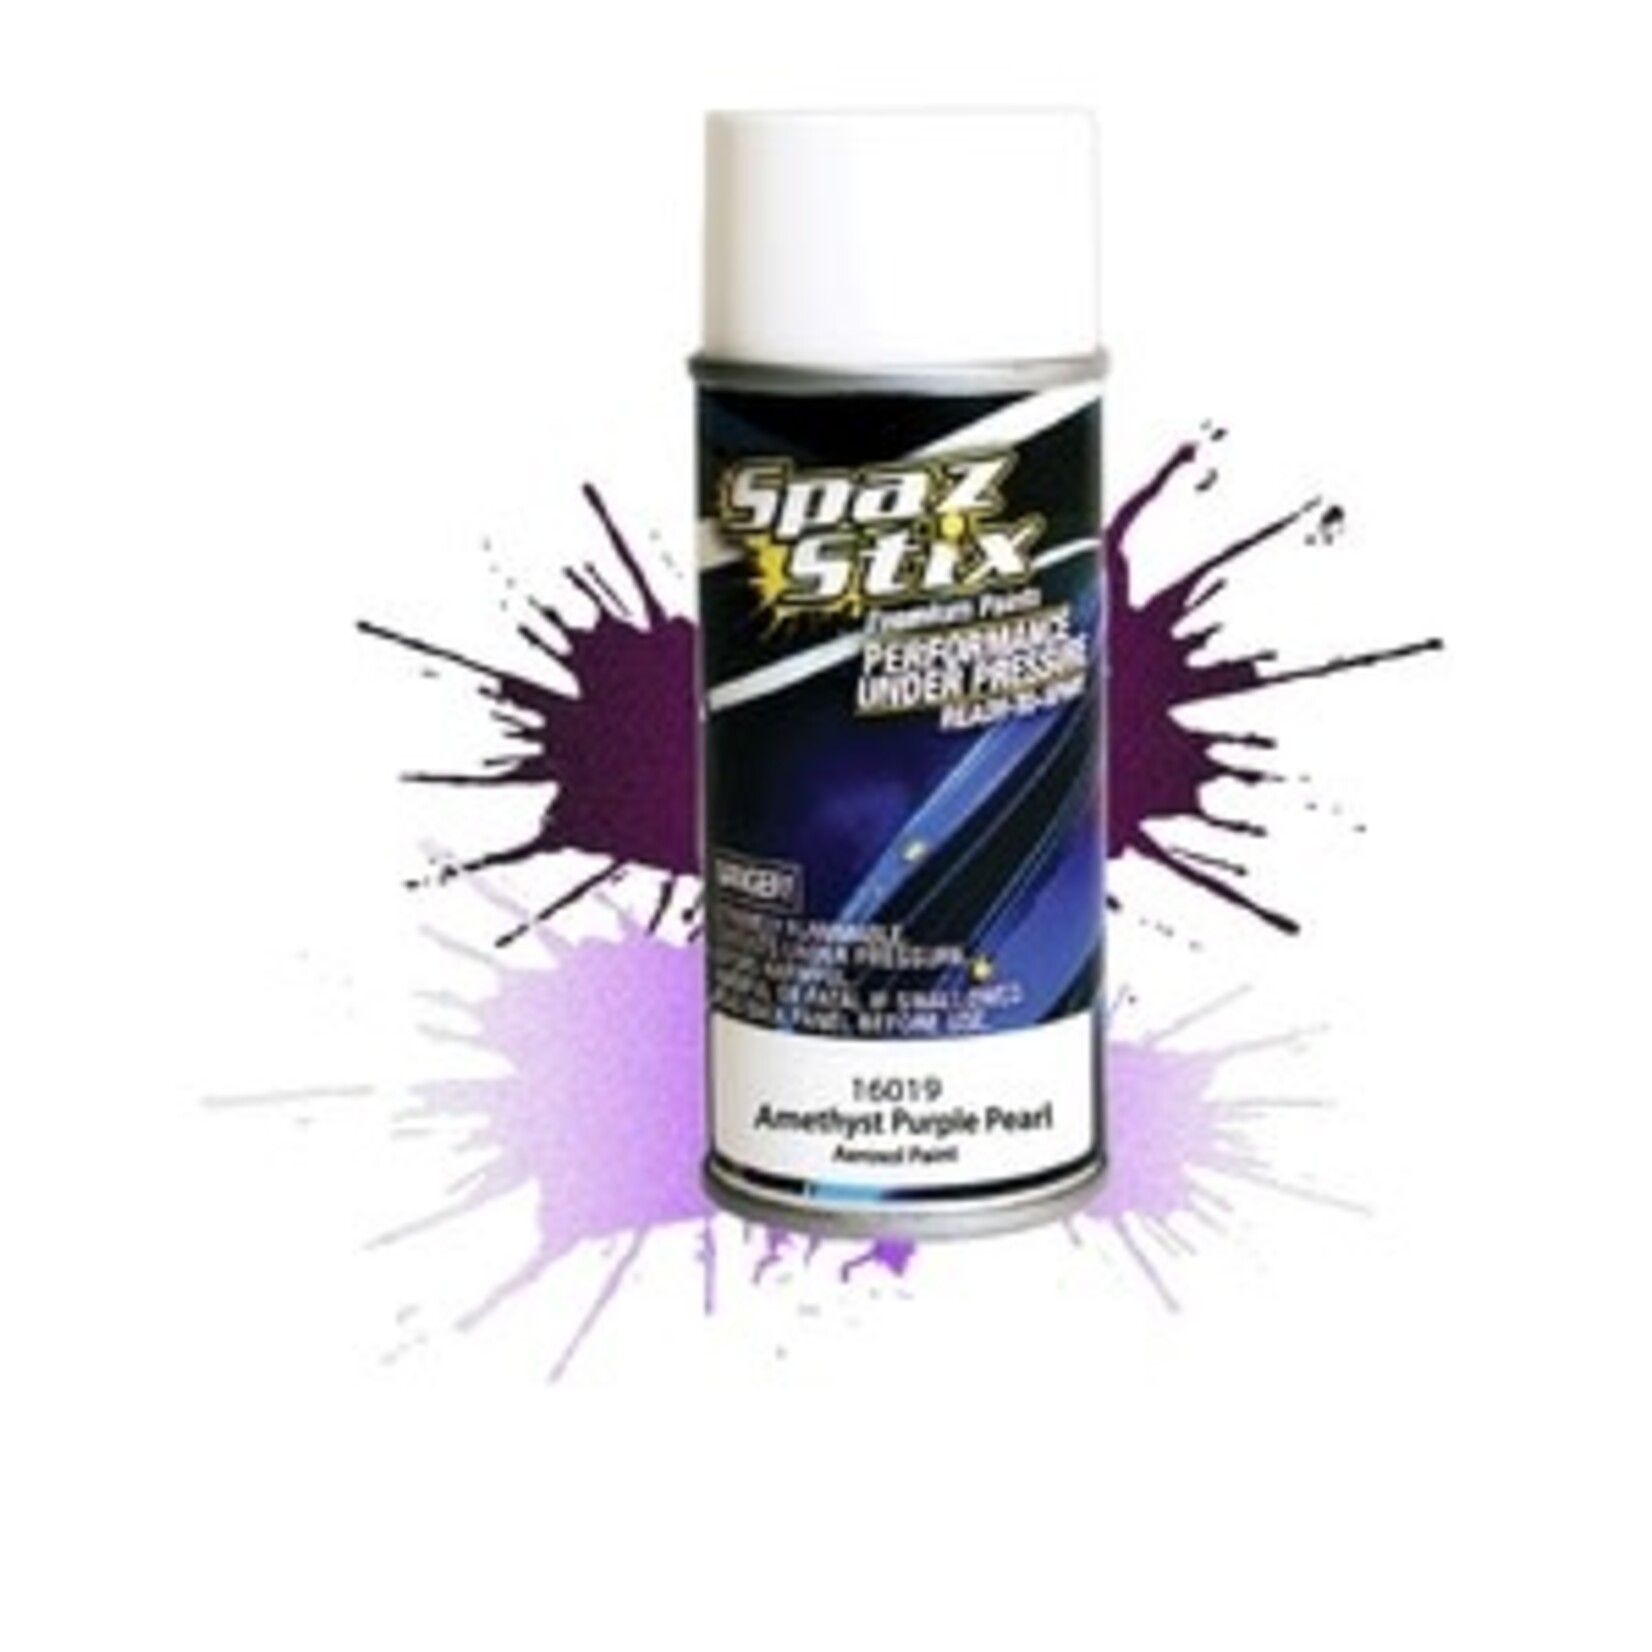 SPAZ STIX Amethyst Purple Pearl Aerosol Paint, 3.5oz Can